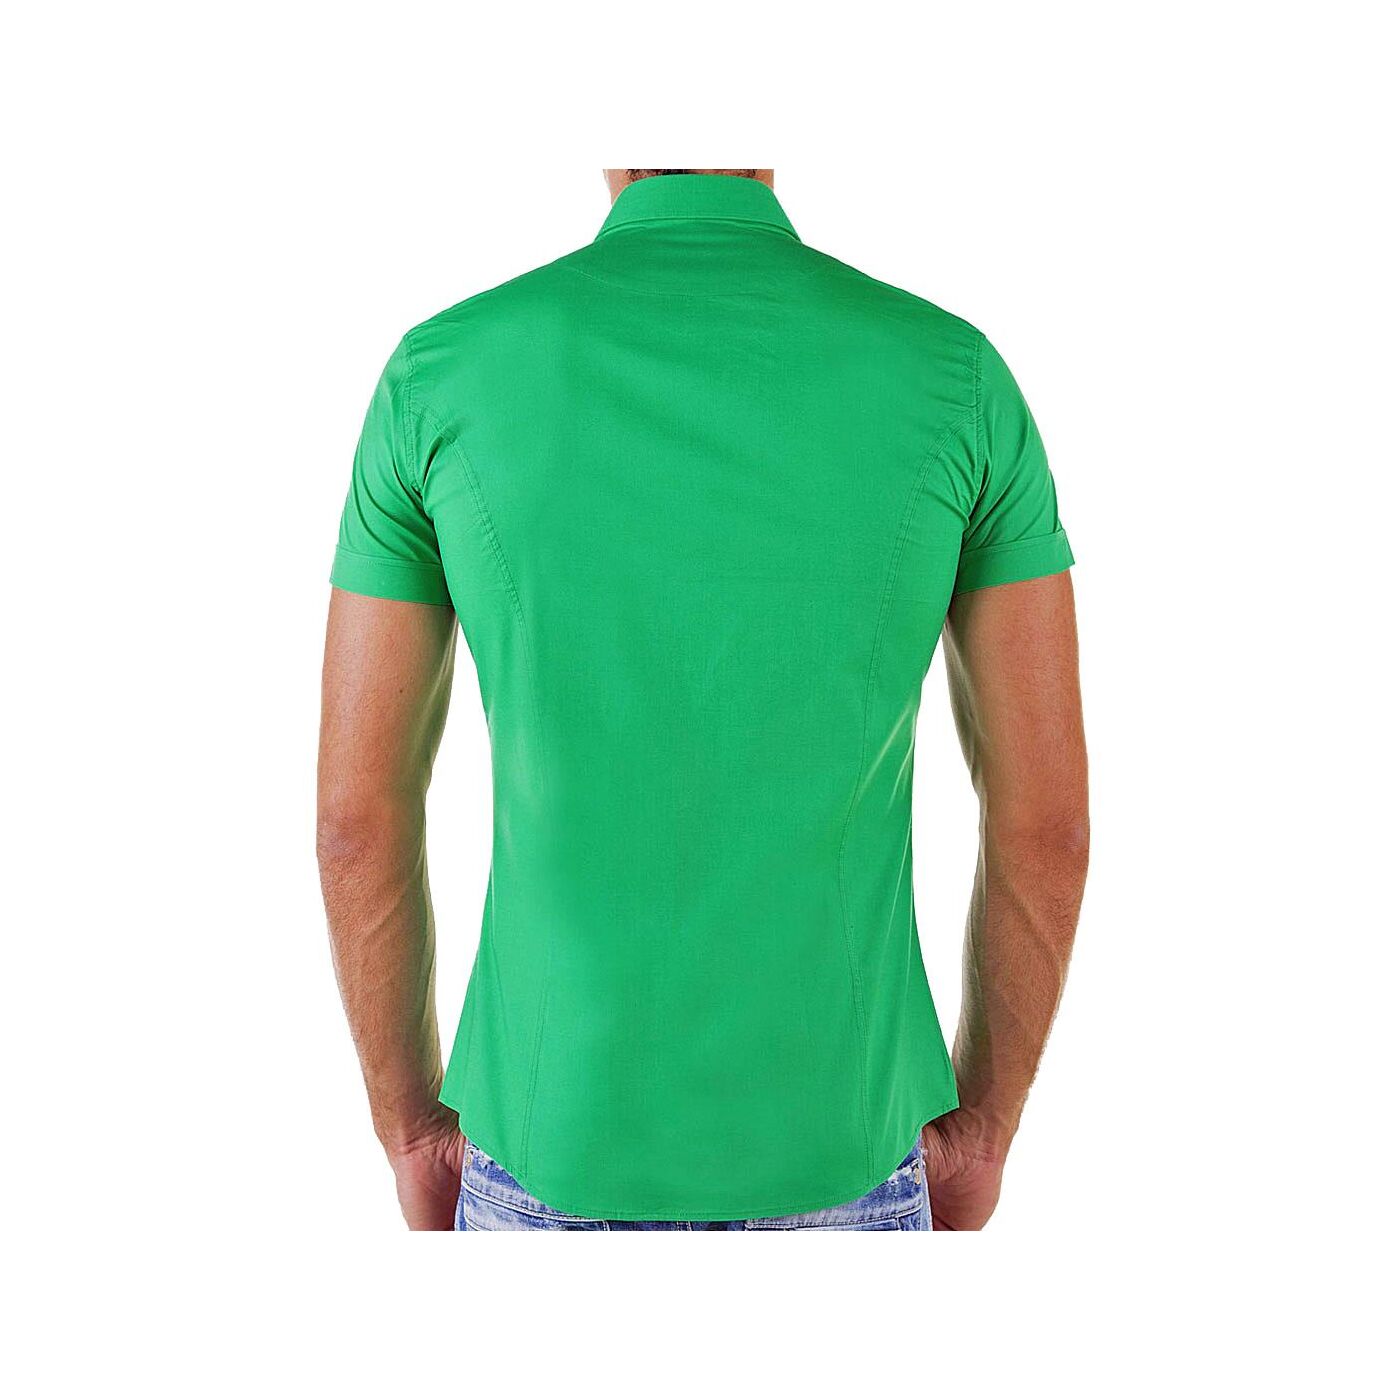 Red Bridge Herren Basic Design Hemd grün - Fit Slim Re, € 24,90 R-2156 kurzarm